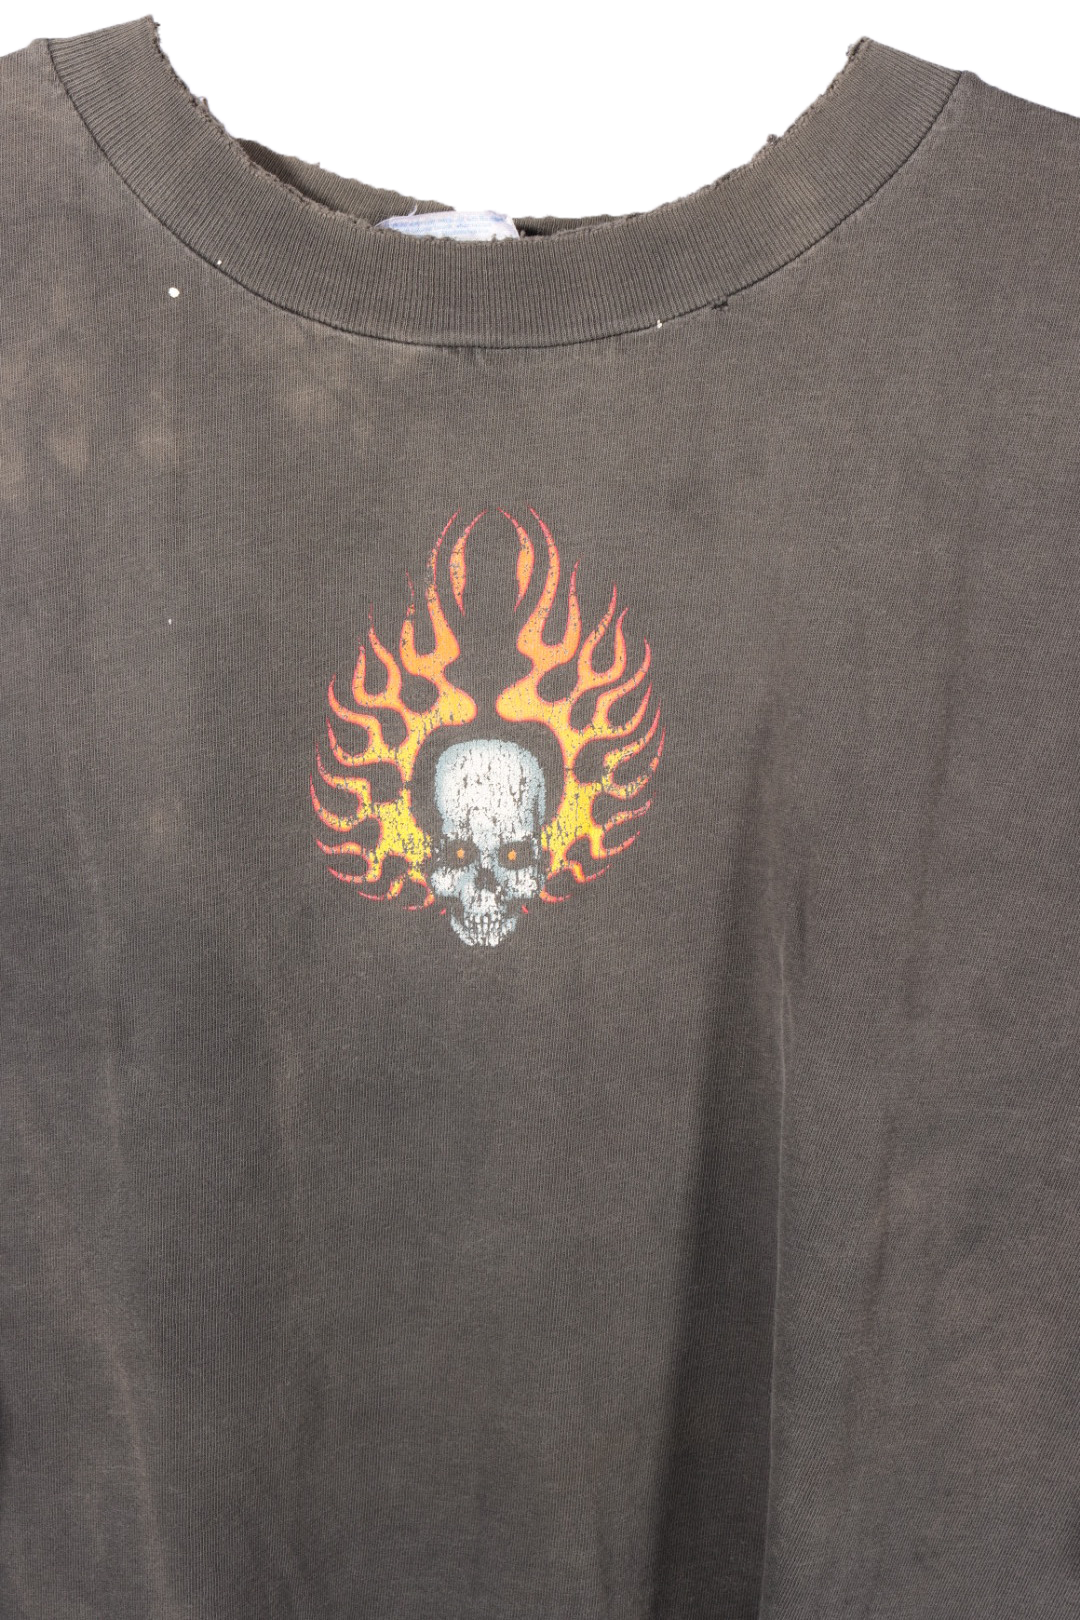 Thrashed Skull n' Flames T-Shirt